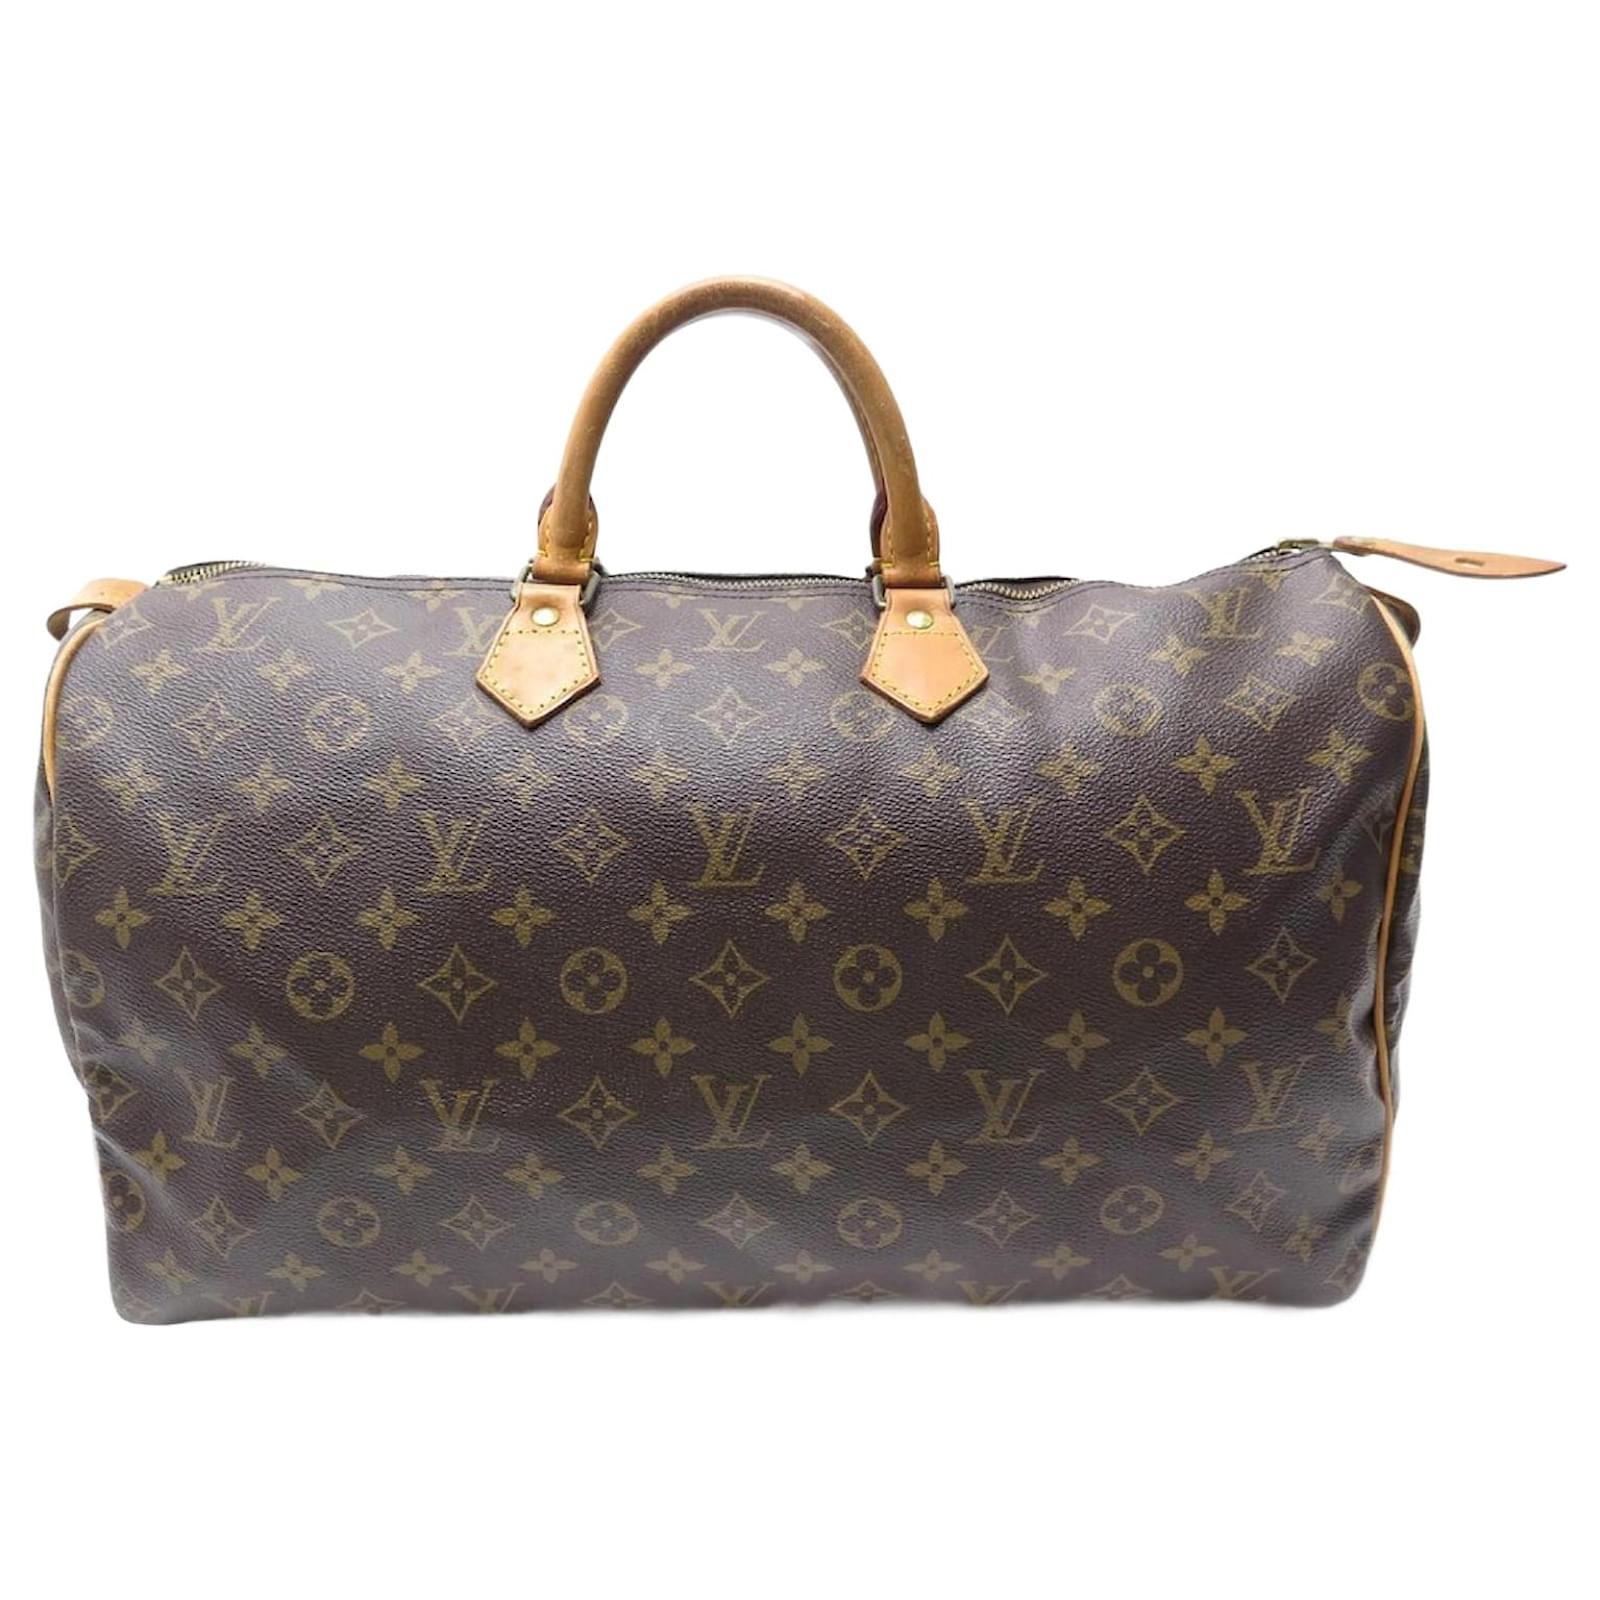 Vintage Louis Vuitton Speedy 40 handbag